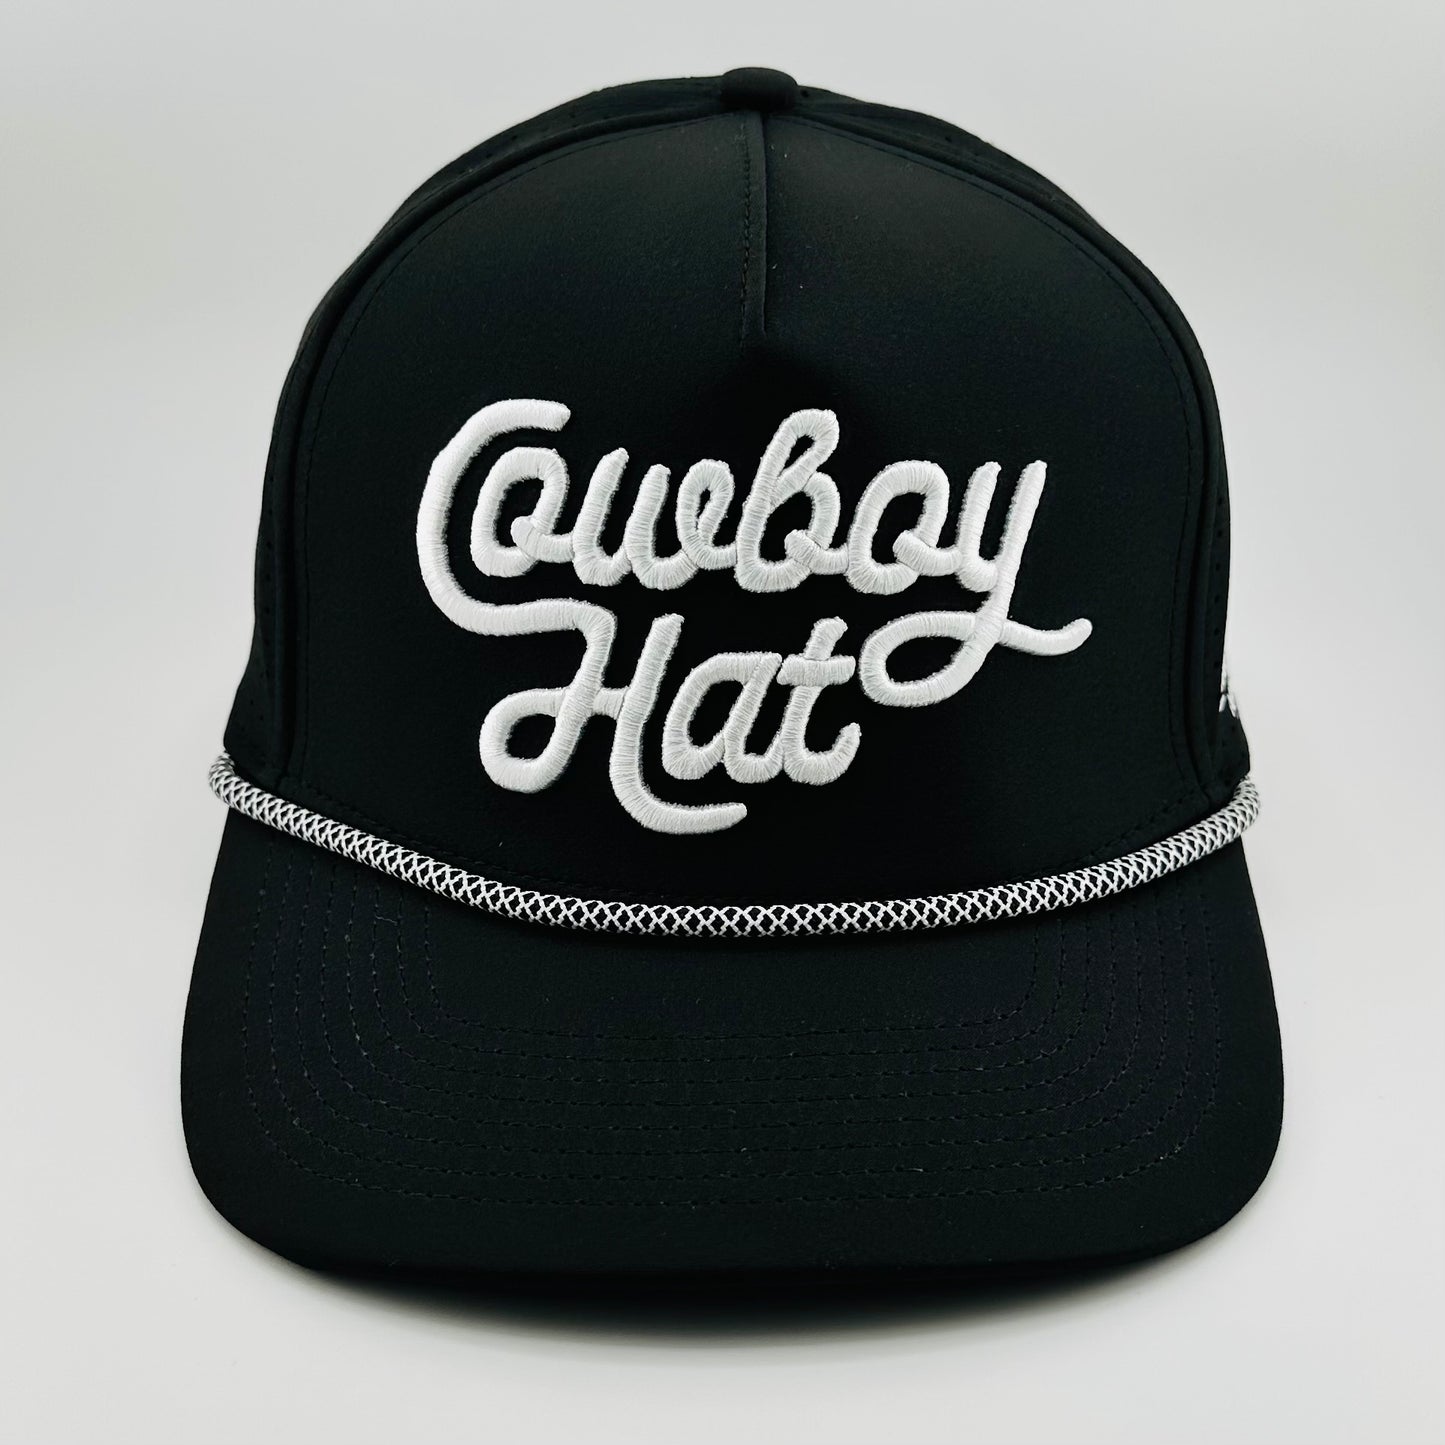 "Cowboy Hat” Summer Edition - Cowboy Revolution Black 5-panel Trucker Hat (QTY 12)